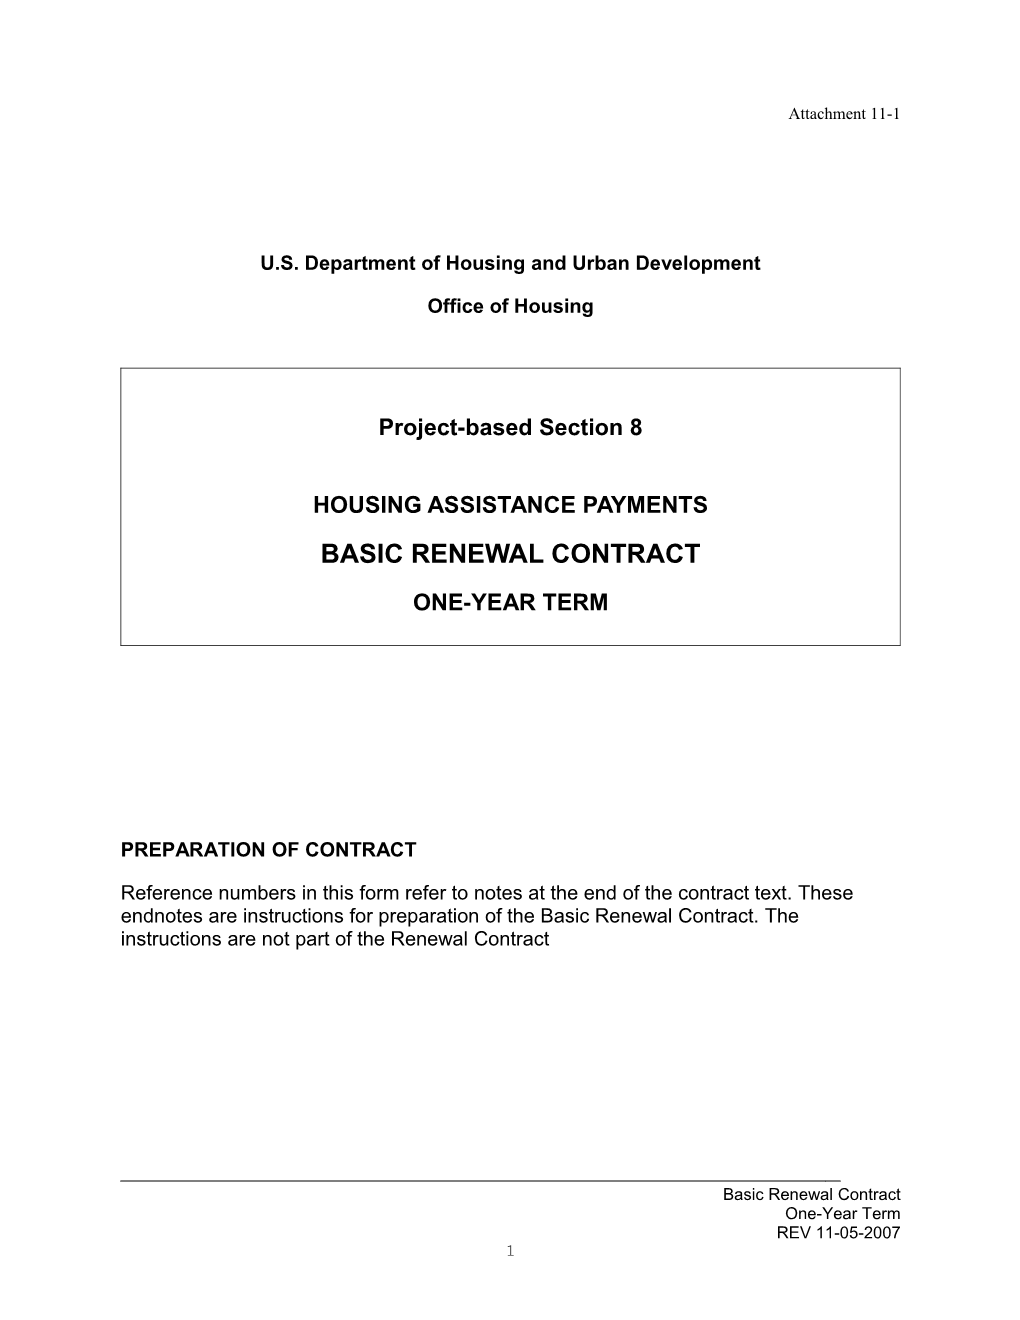 U.S. Department of Housing and Urban Development s47